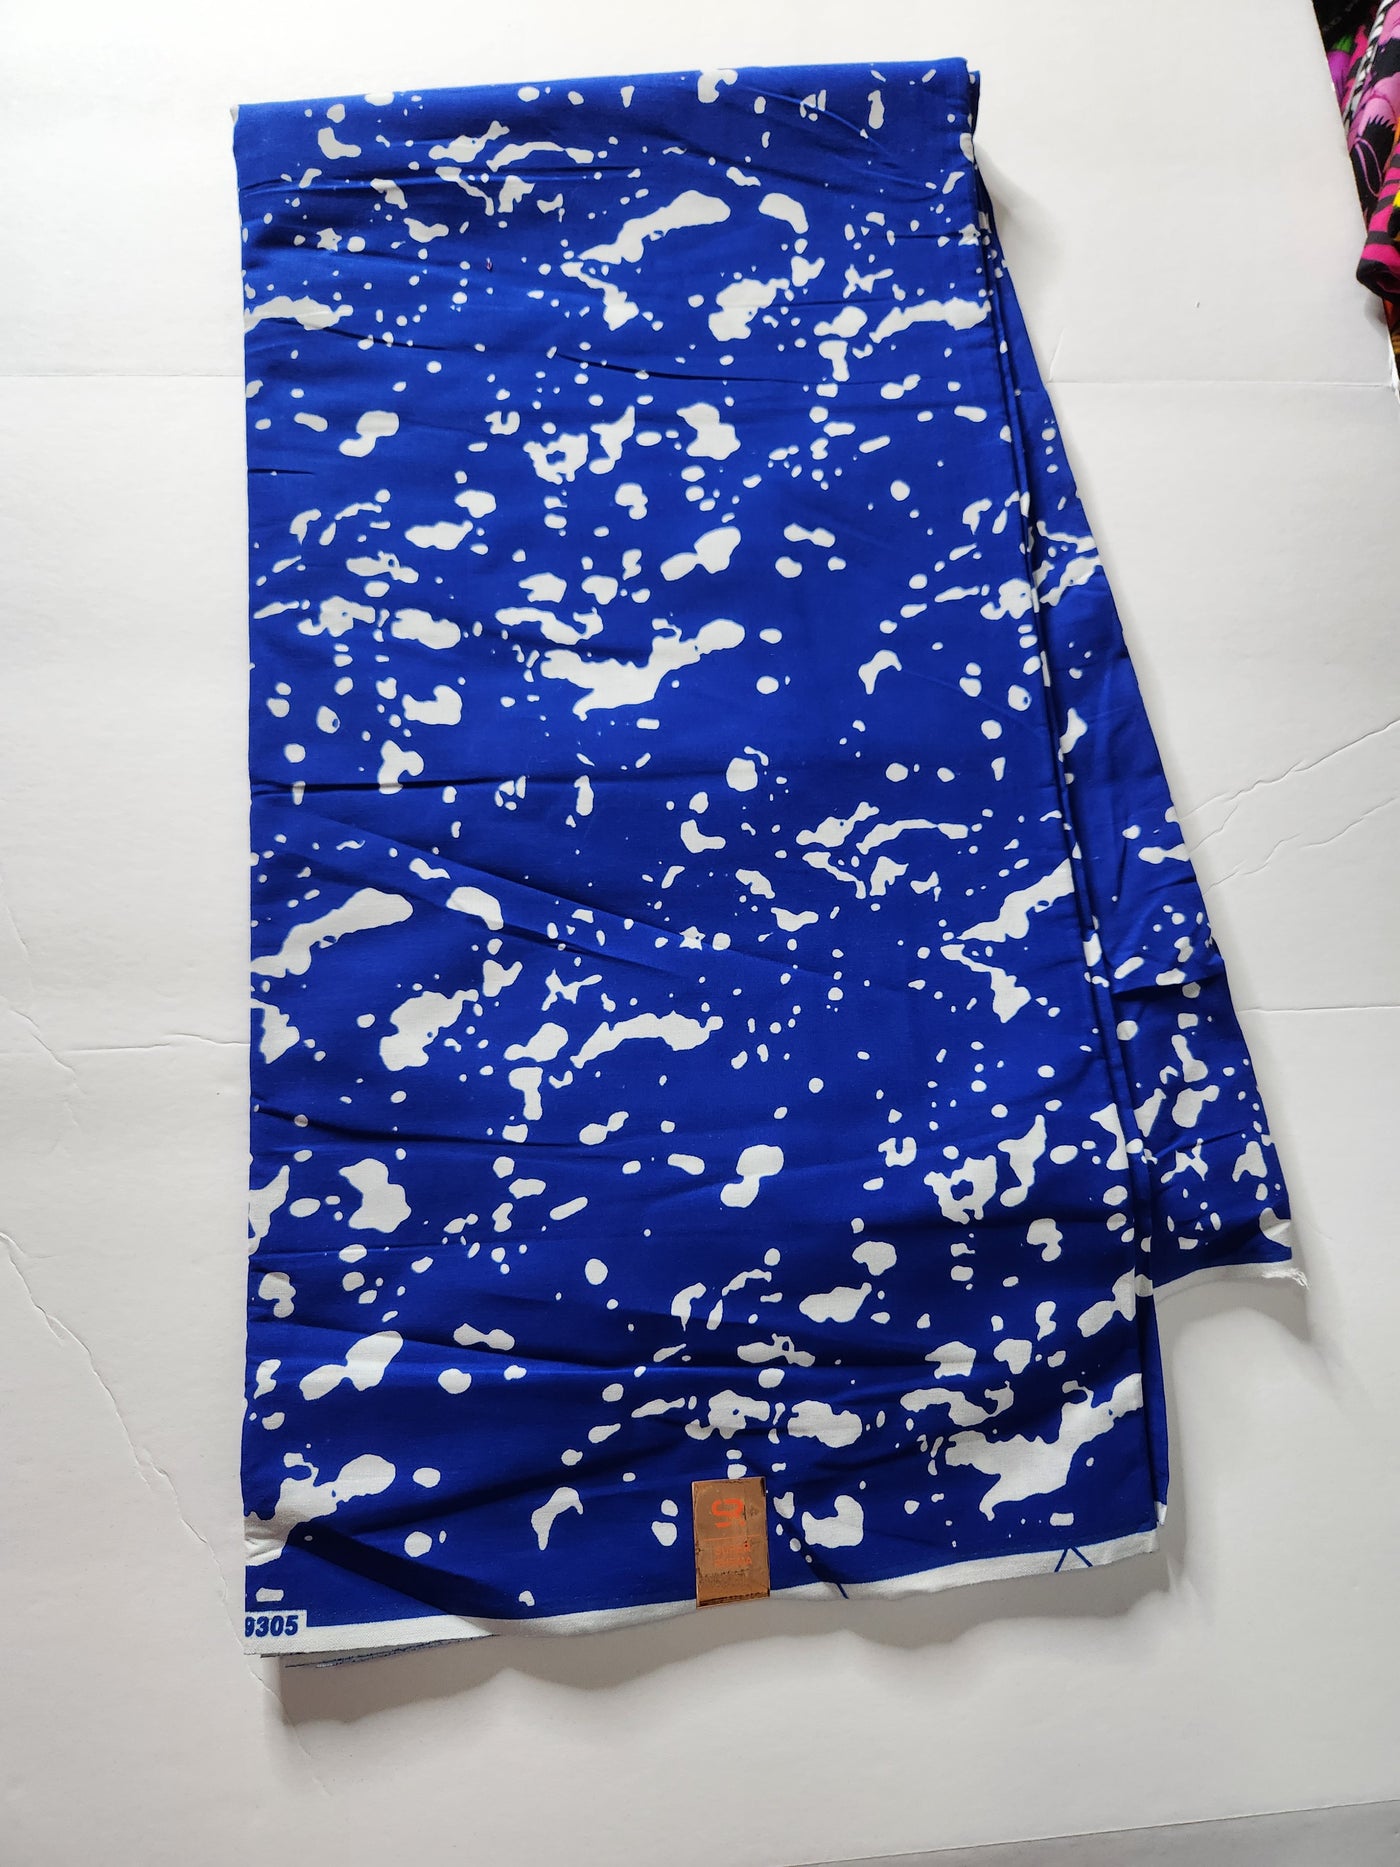 Blue and White Ankara Print Fabric